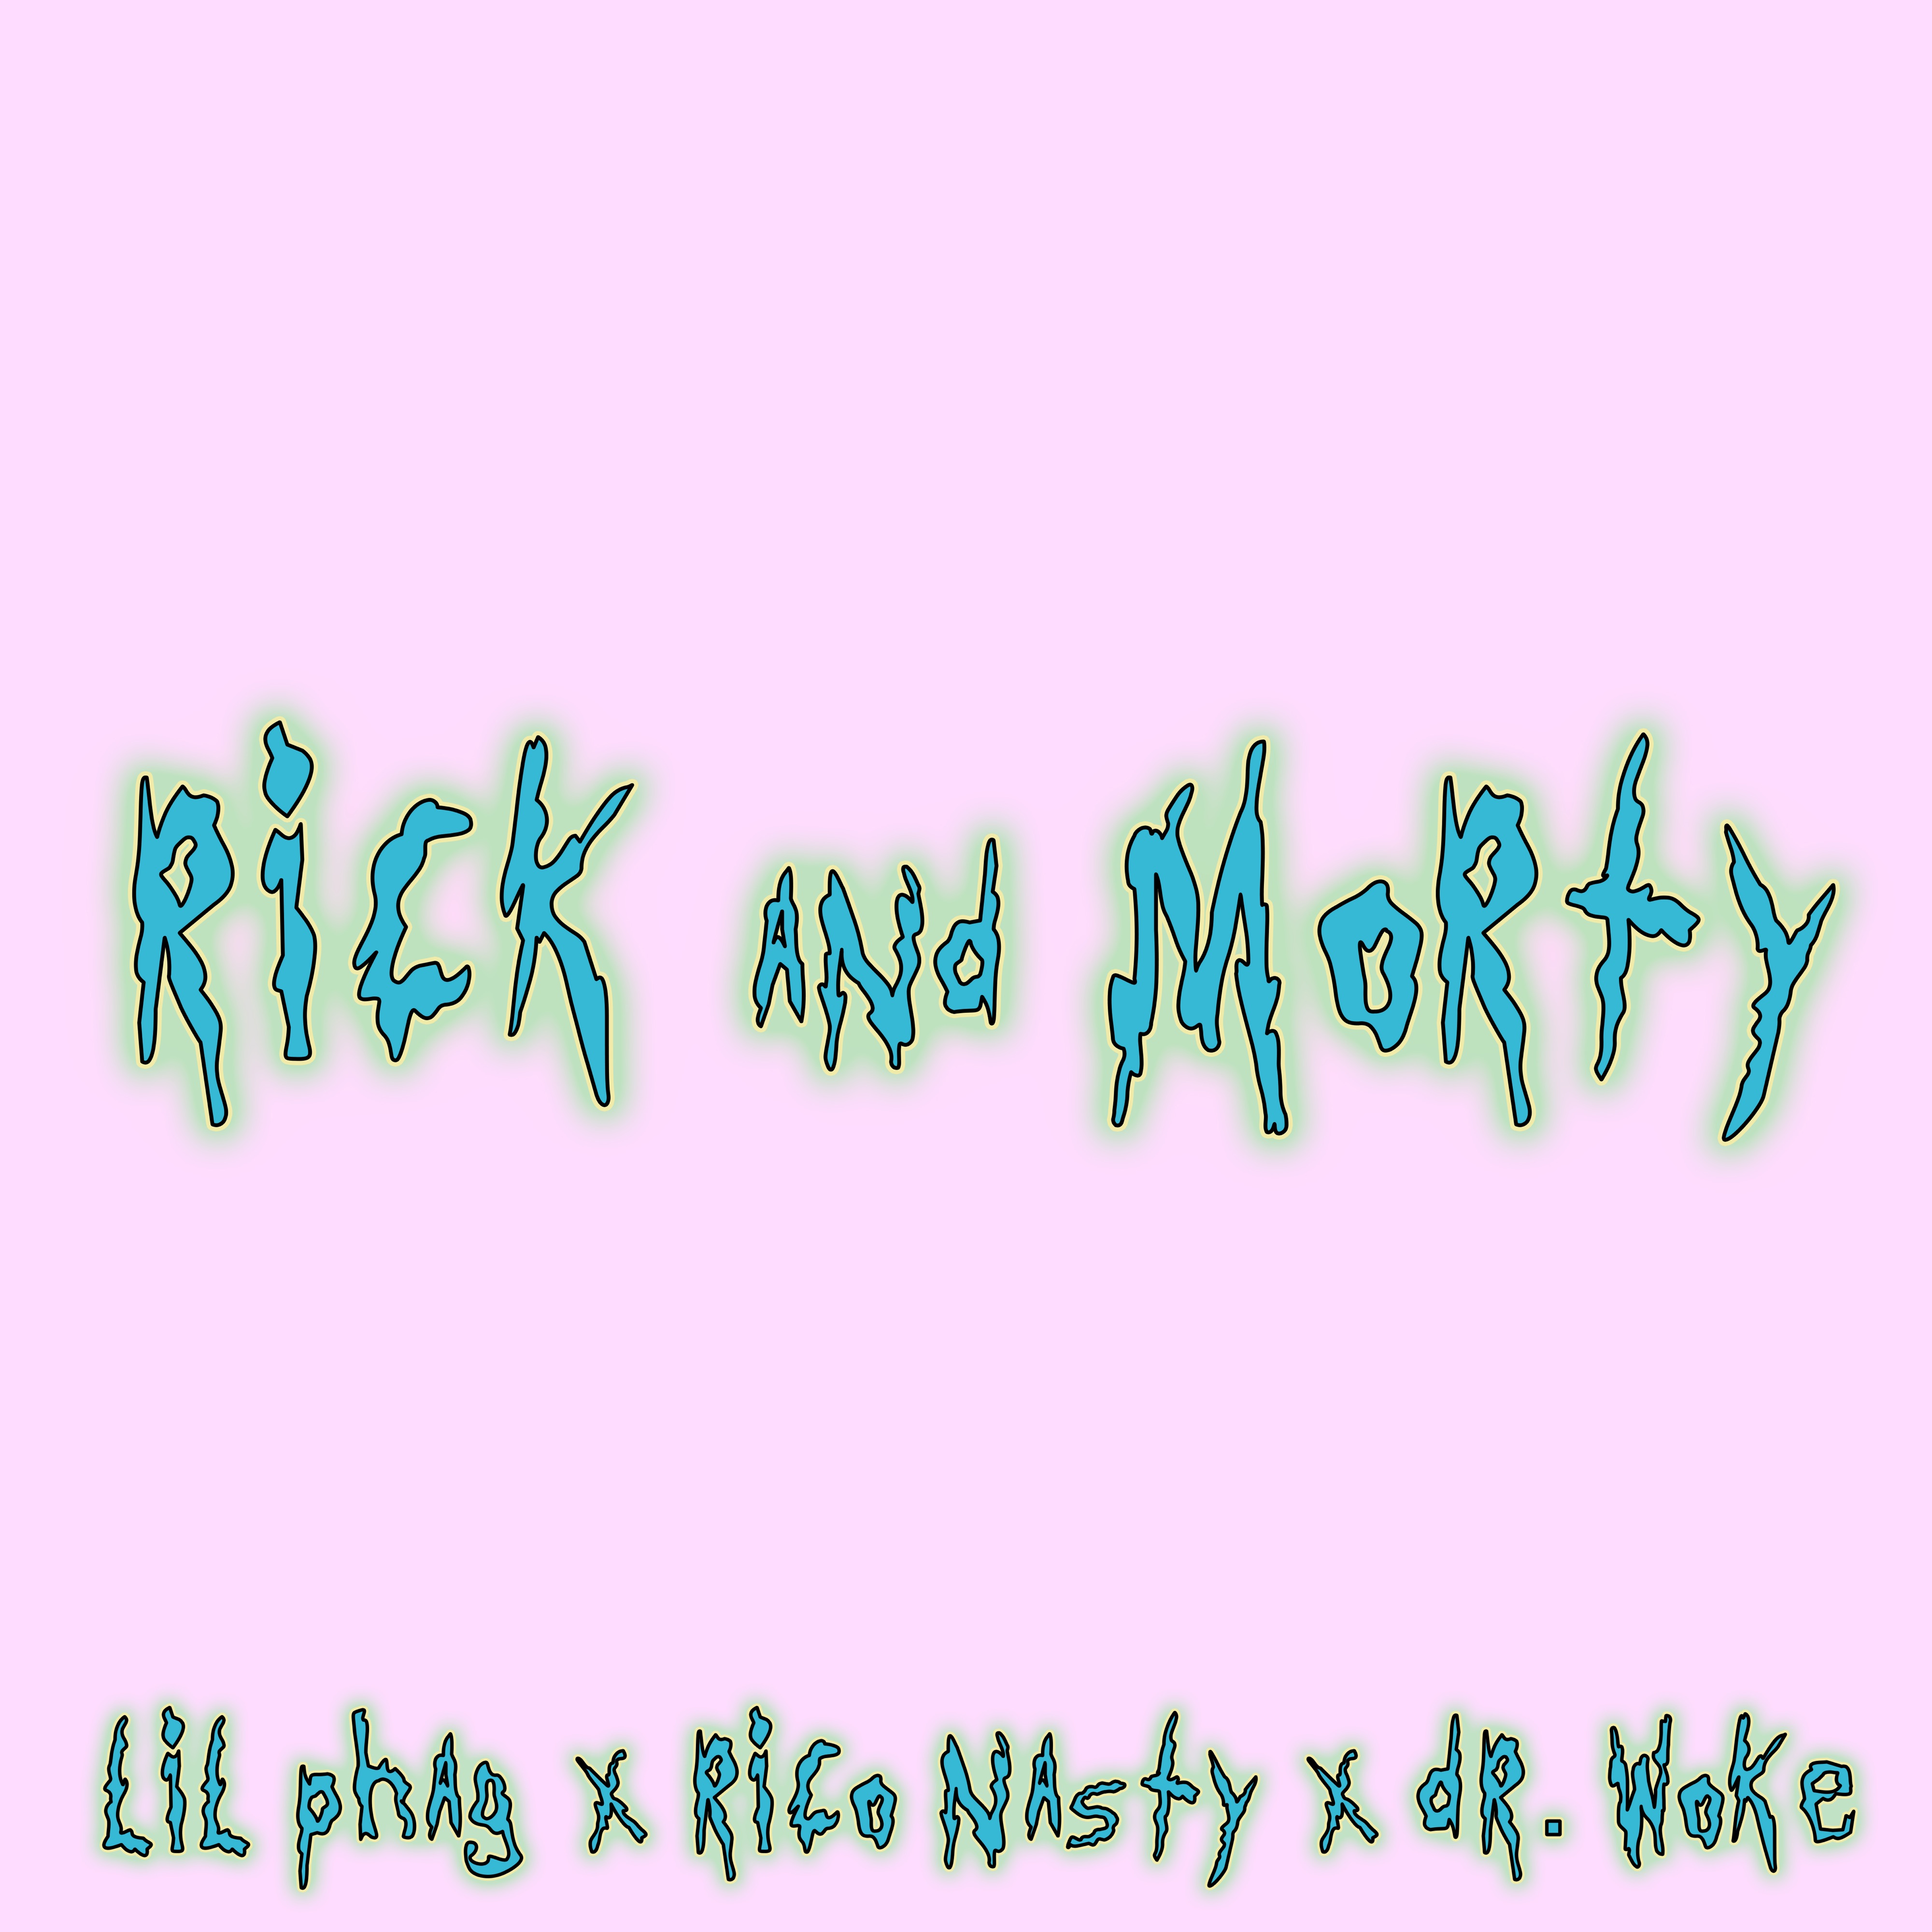 dapper dolly on X: Rick n Morty got a lil drip🔥 #artbydolph   / X